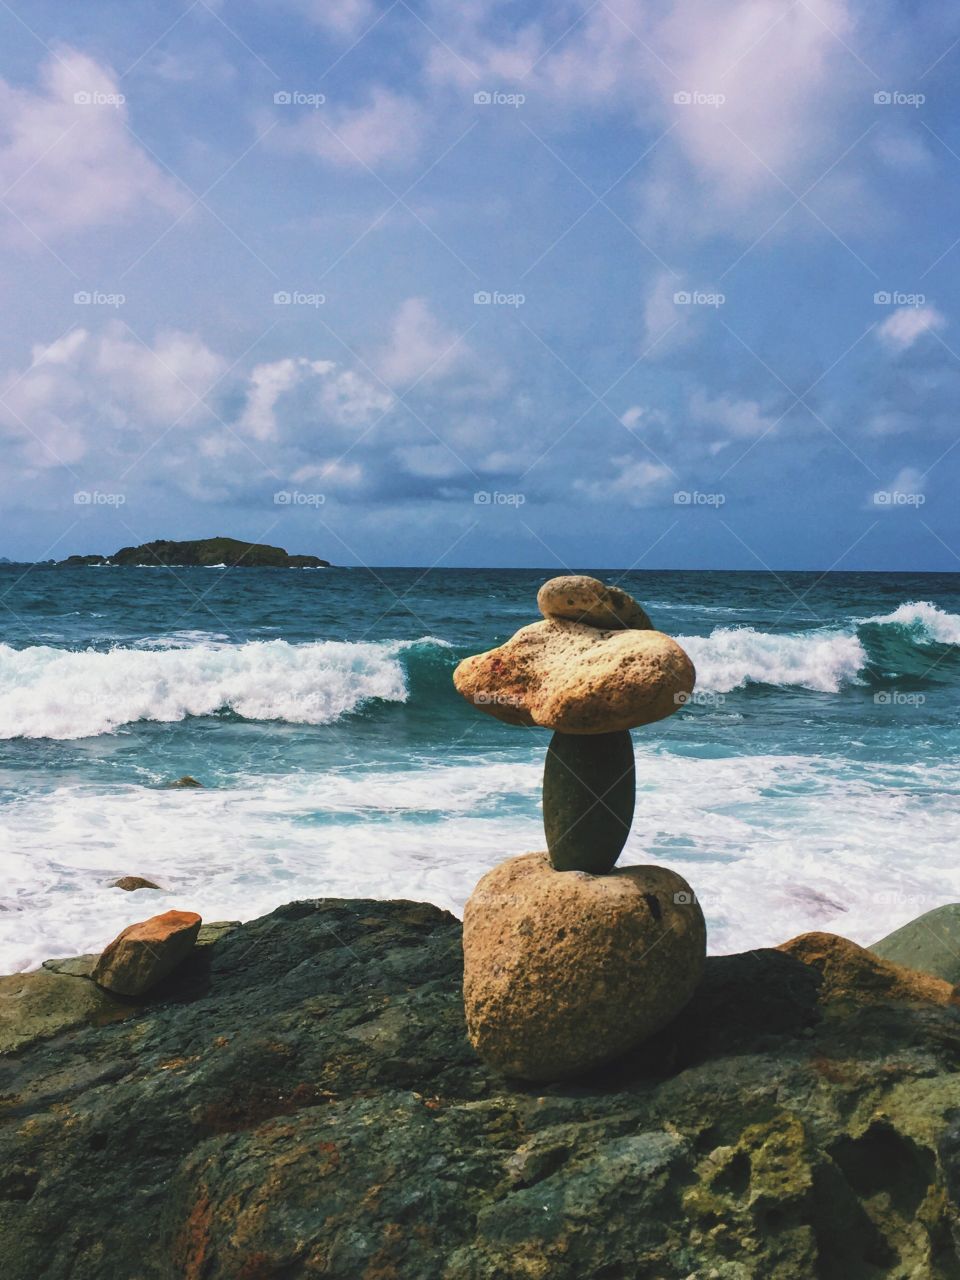 Rocks Stacked On A Beach, Beach Art, Waves Crashing In Caribbean Paradise, Rocks On The Beach, Portrait Of The Ocean, St. Martin 